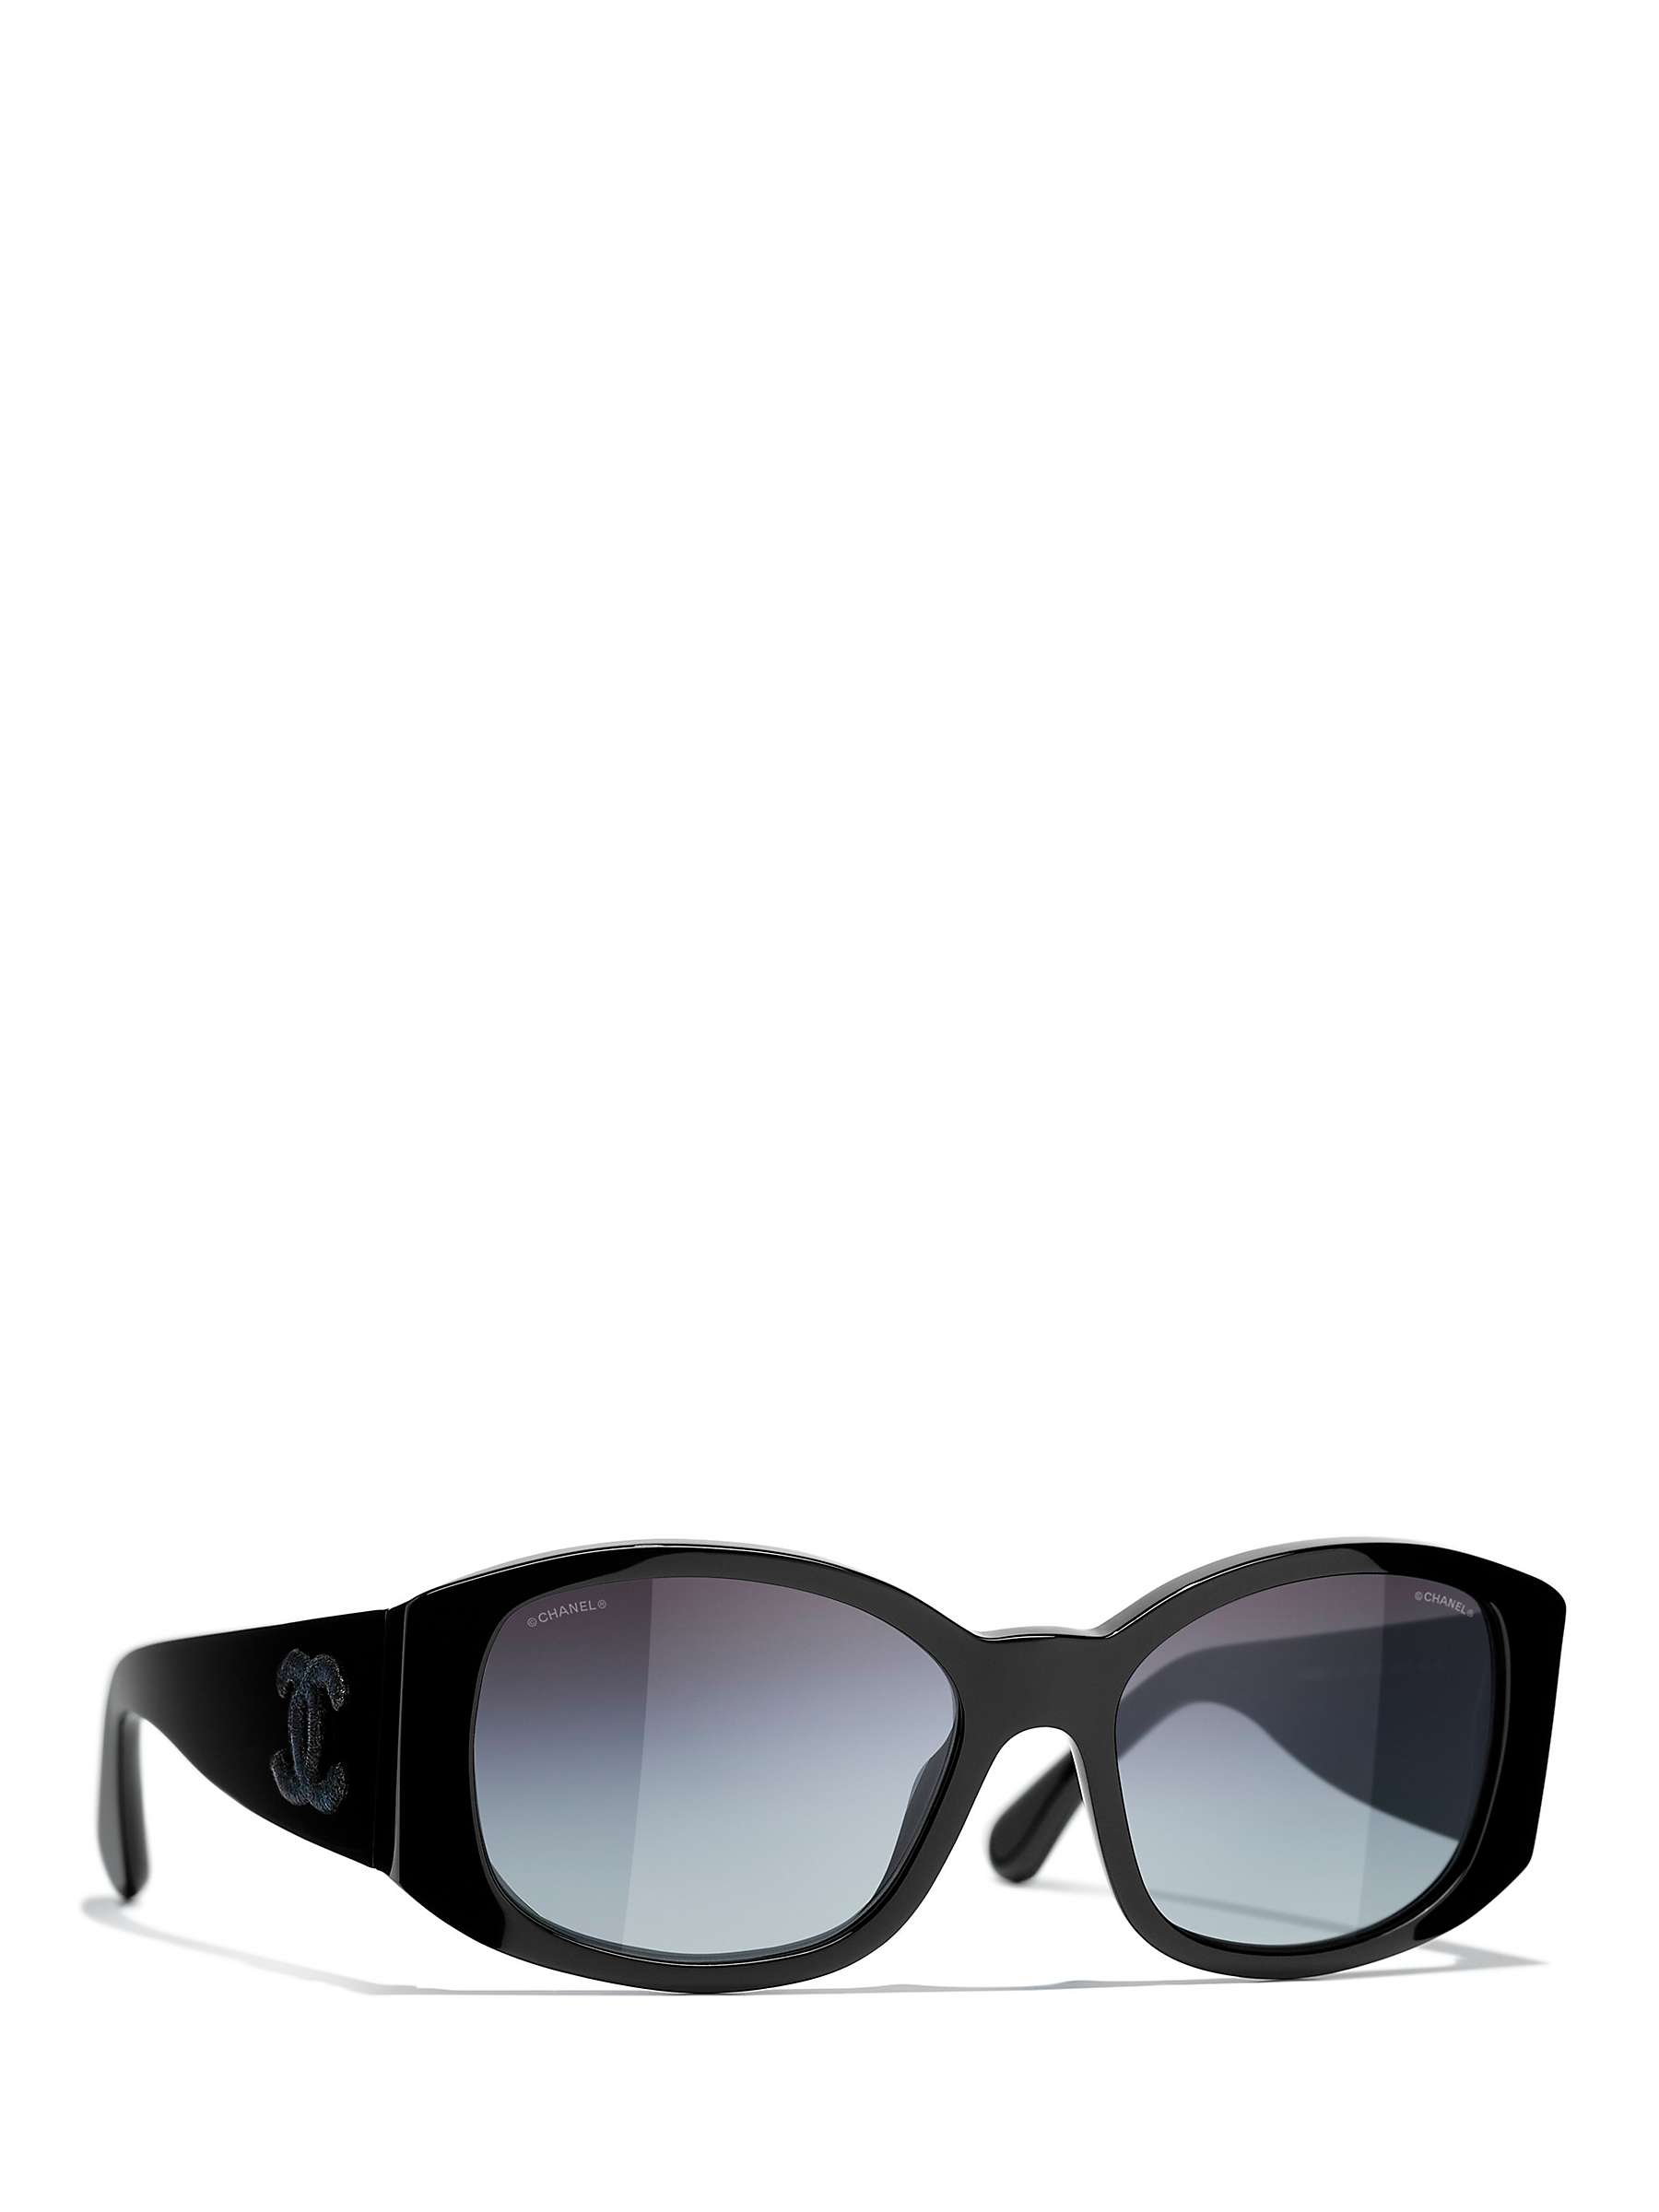 CHANEL CH5450 Women's Irregular Sunglasses at John Lewis & Partners